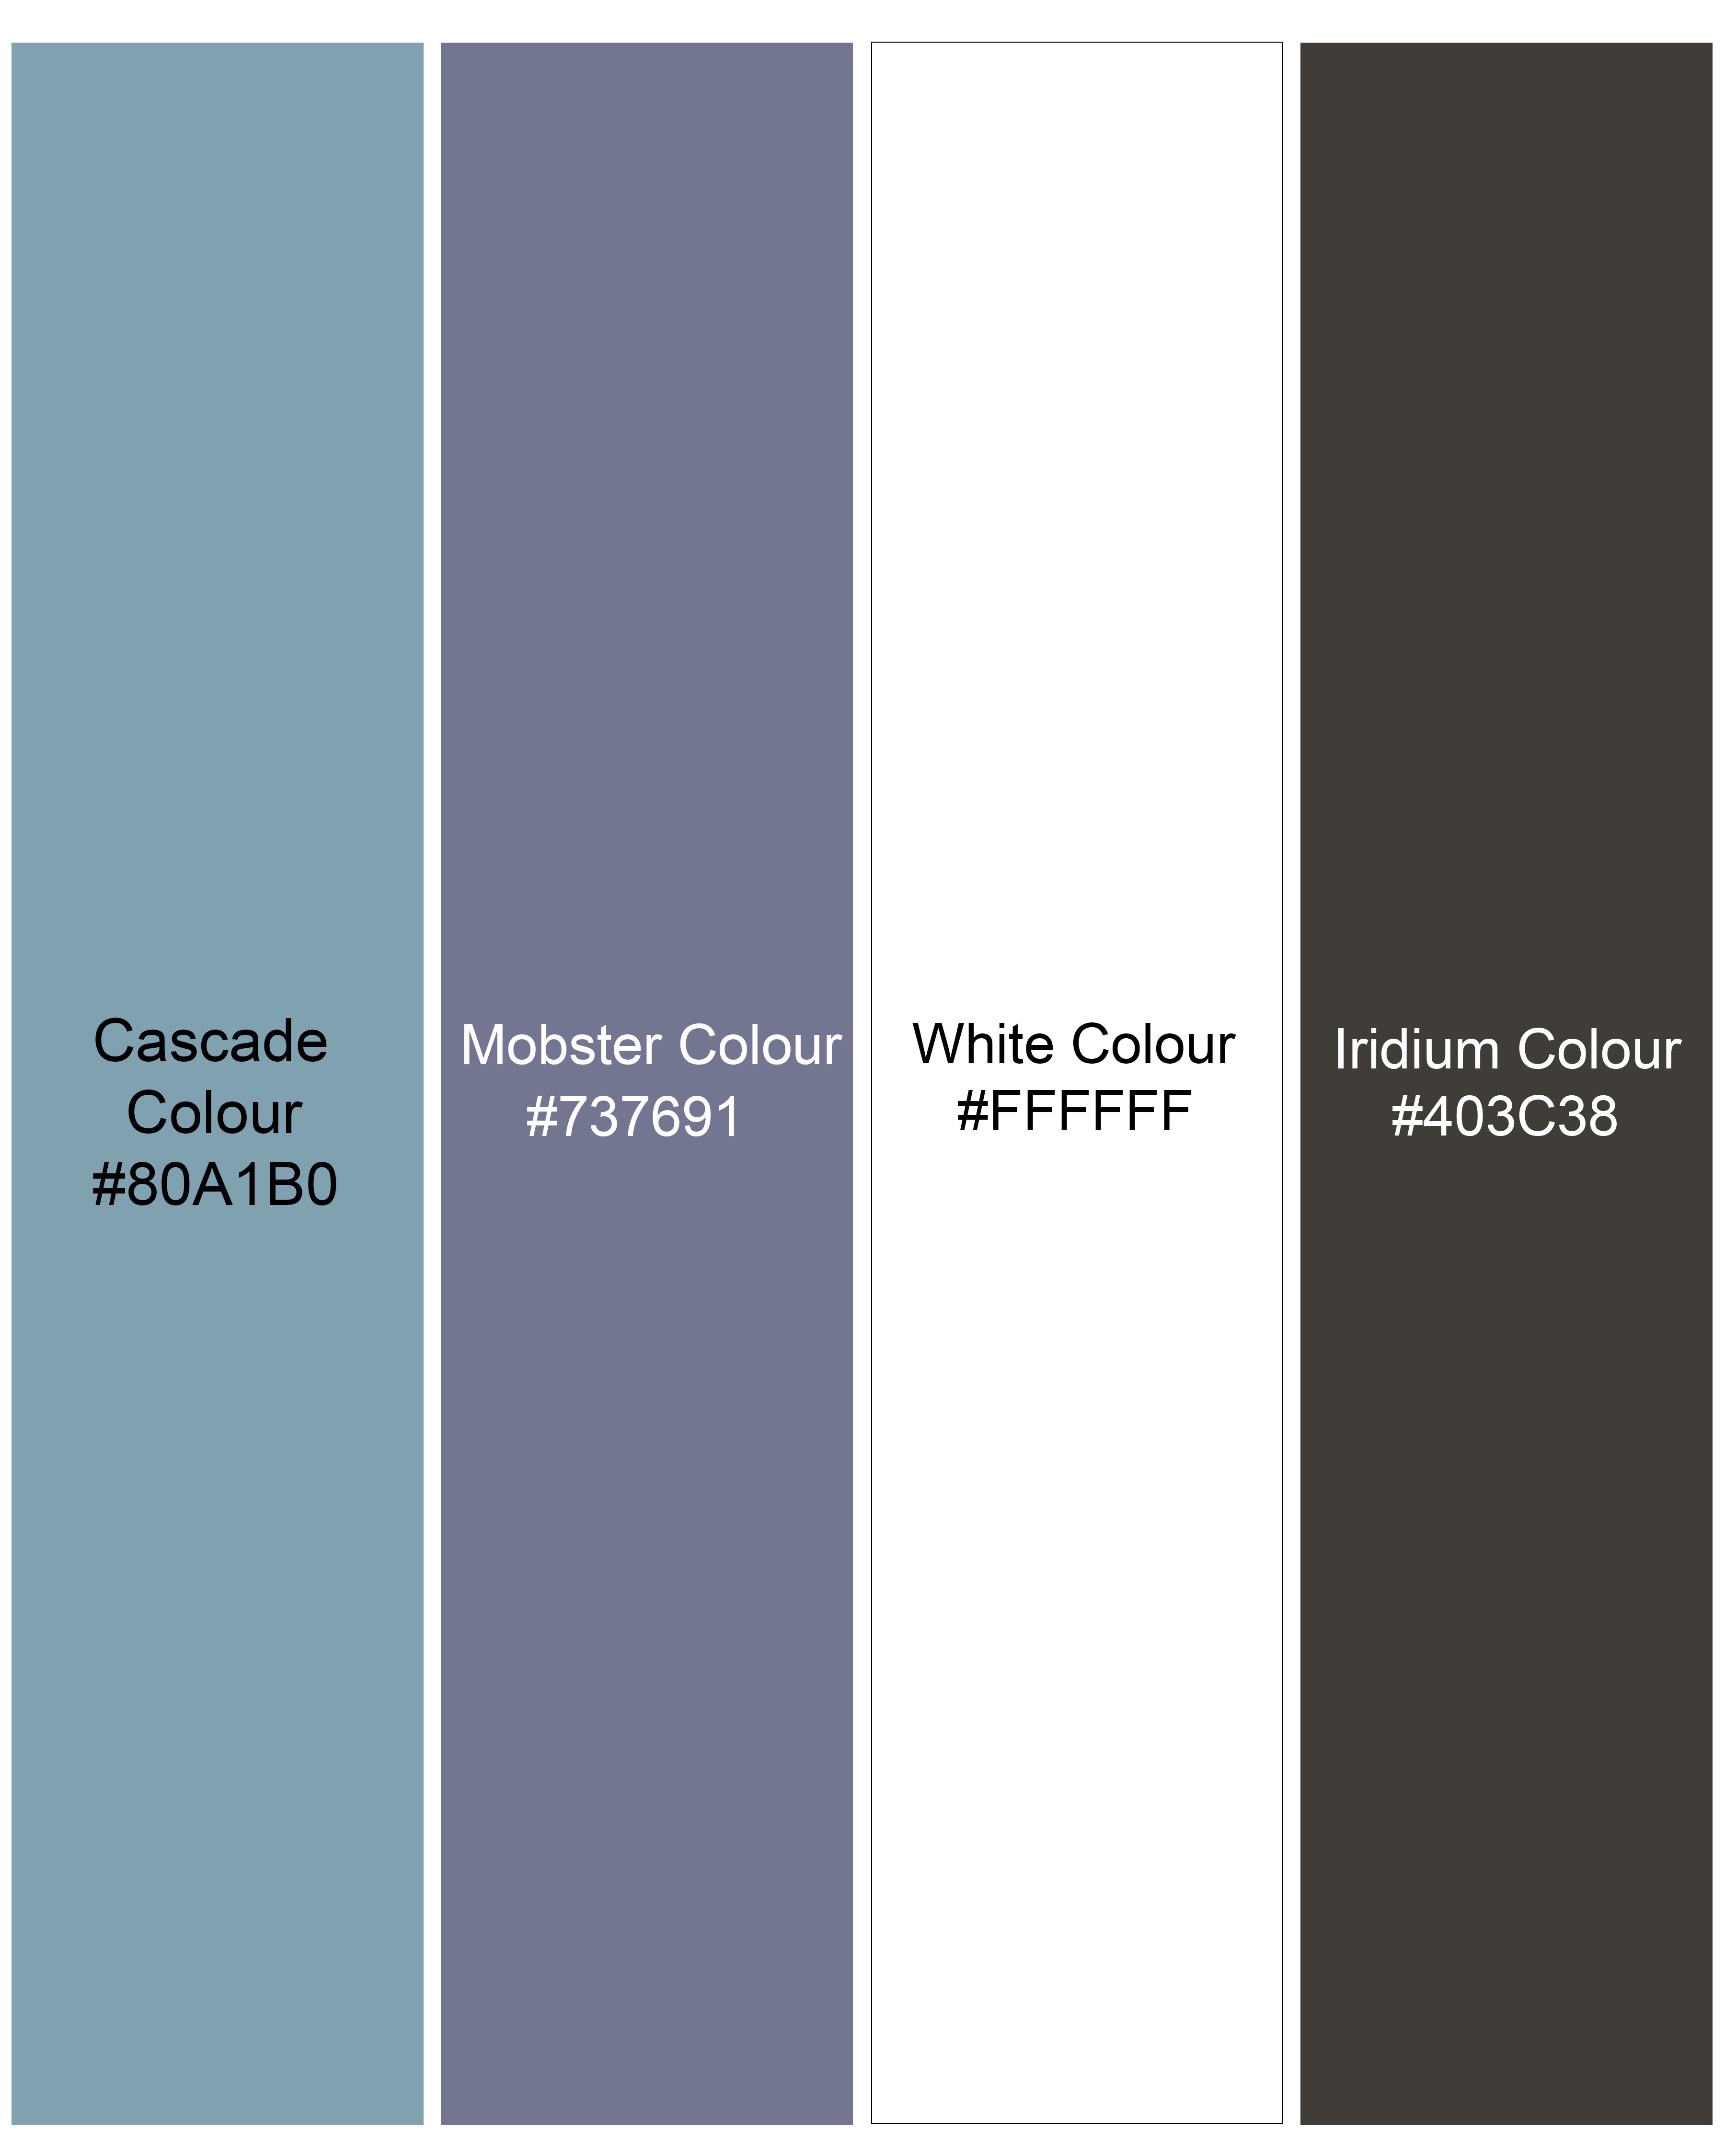 Cascade Blue with Mobster Blue Multicolour Camouflage Printed Royal Oxford Shirt 8890-BD-38, 8890-BD-H-38,  8890-BD-39,  8890-BD-H-39,  8890-BD-40,  8890-BD-H-40,  8890-BD-42,  8890-BD-H-42,  8890-BD-44,  8890-BD-H-44,  8890-BD-46,  8890-BD-H-46,  8890-BD-48,  8890-BD-H-48,  8890-BD-50,  8890-BD-H-50,  8890-BD-52,  8890-BD-H-52